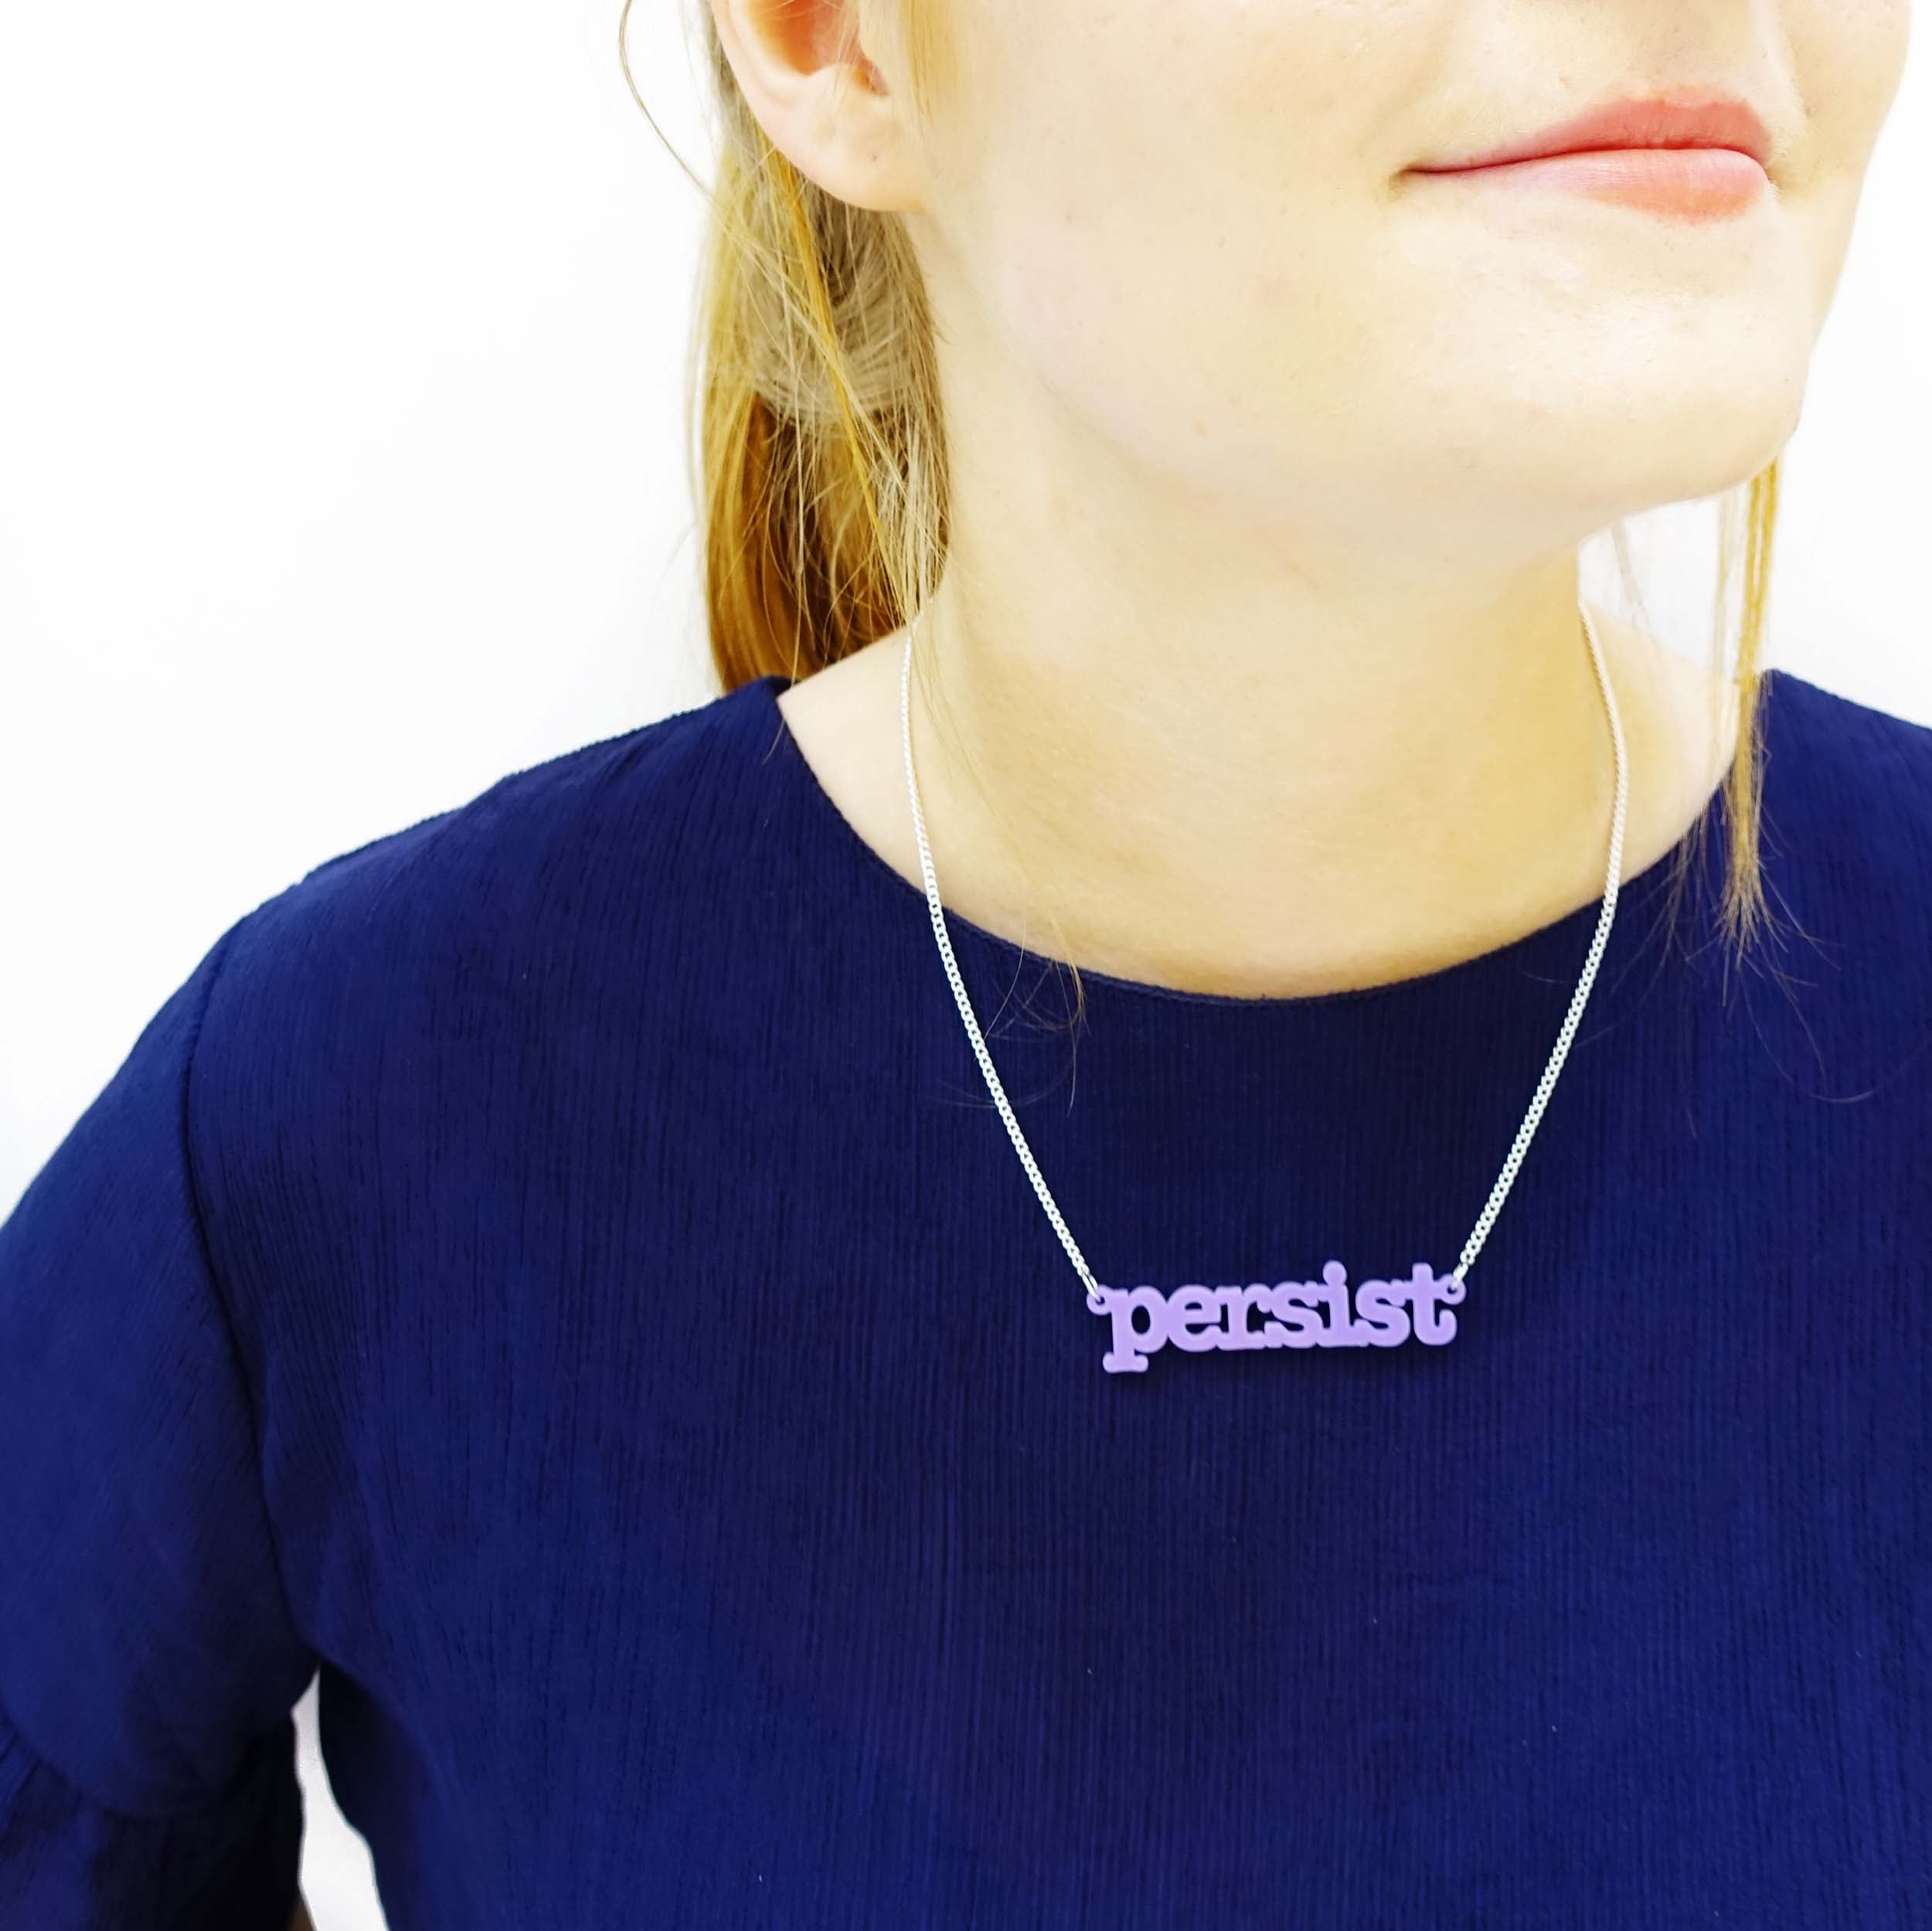 Model wears a Parma violet Persist necklace.